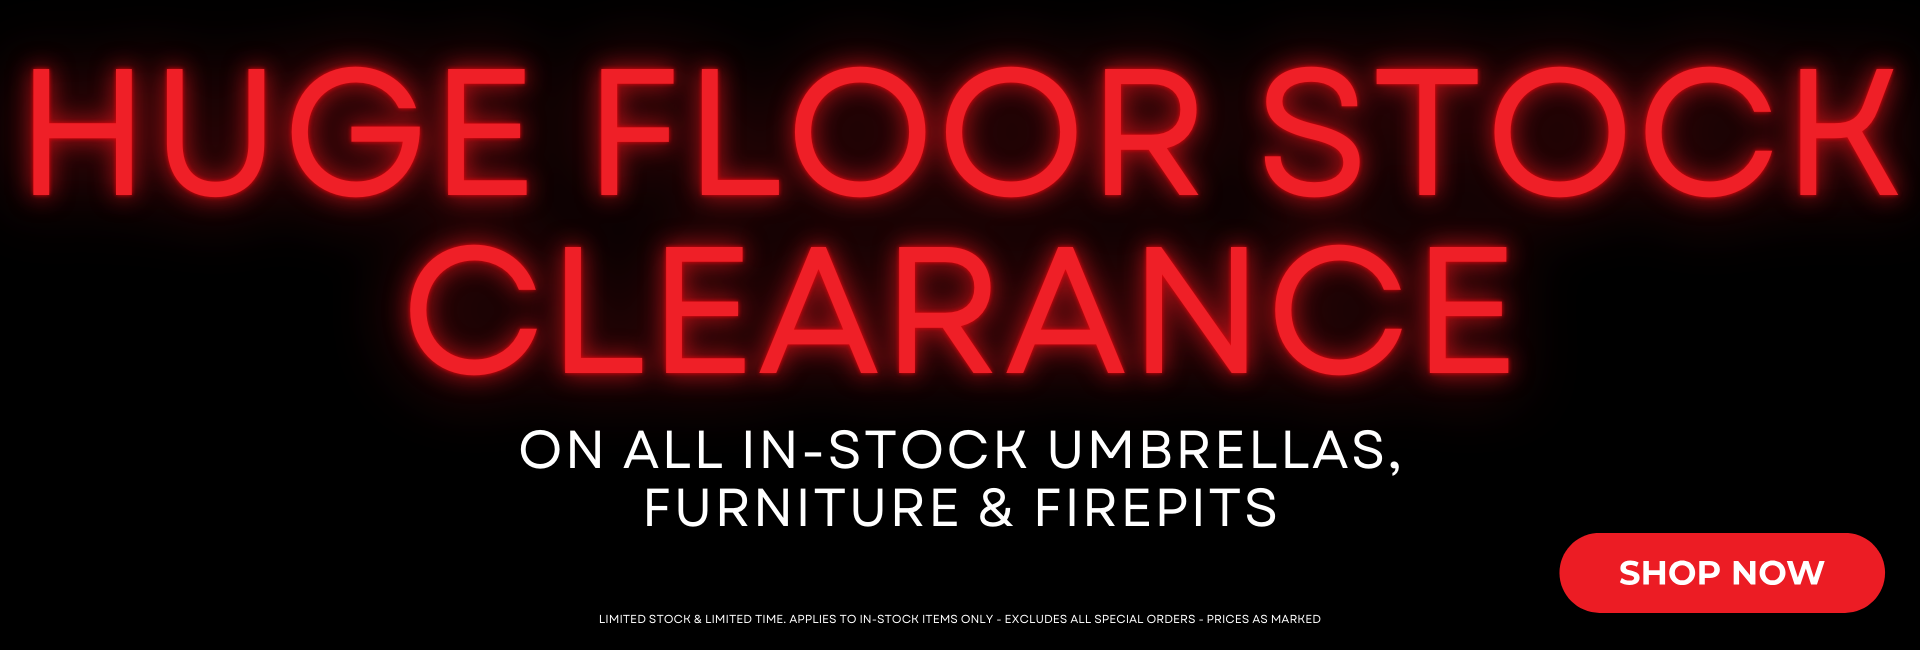 Huge floor stock clearance